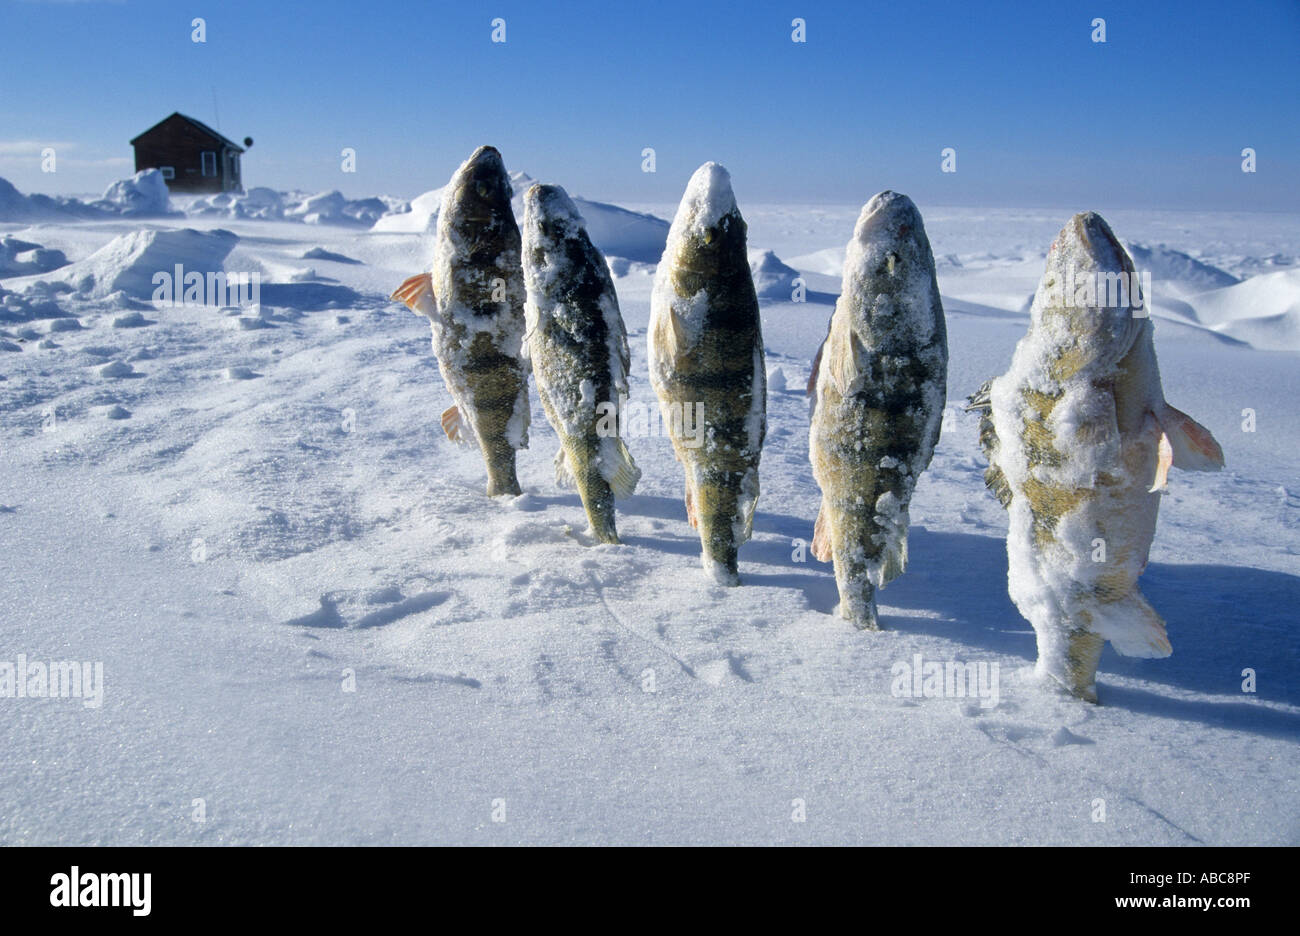 Frozen fish in the snow, Mille Lacs Lake, Minnesota, USA Stock Photo: 7341678 - Alamy